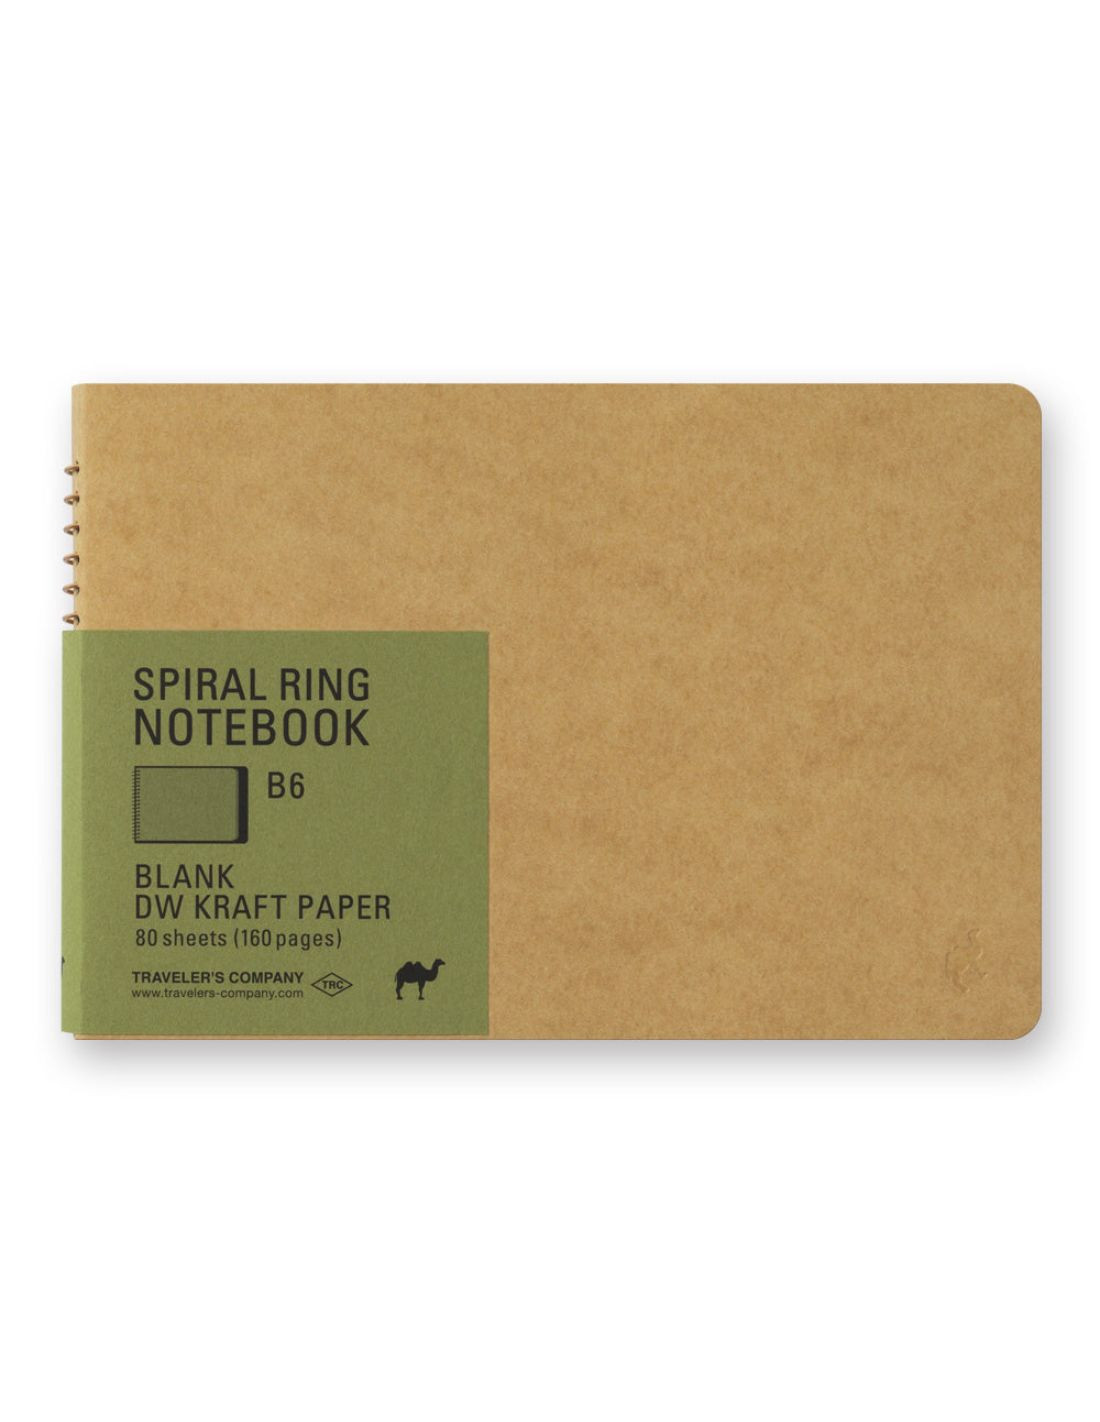 B6 Blank DW Kraft Paper - Spiral Ring Notebook - Traveler's Company